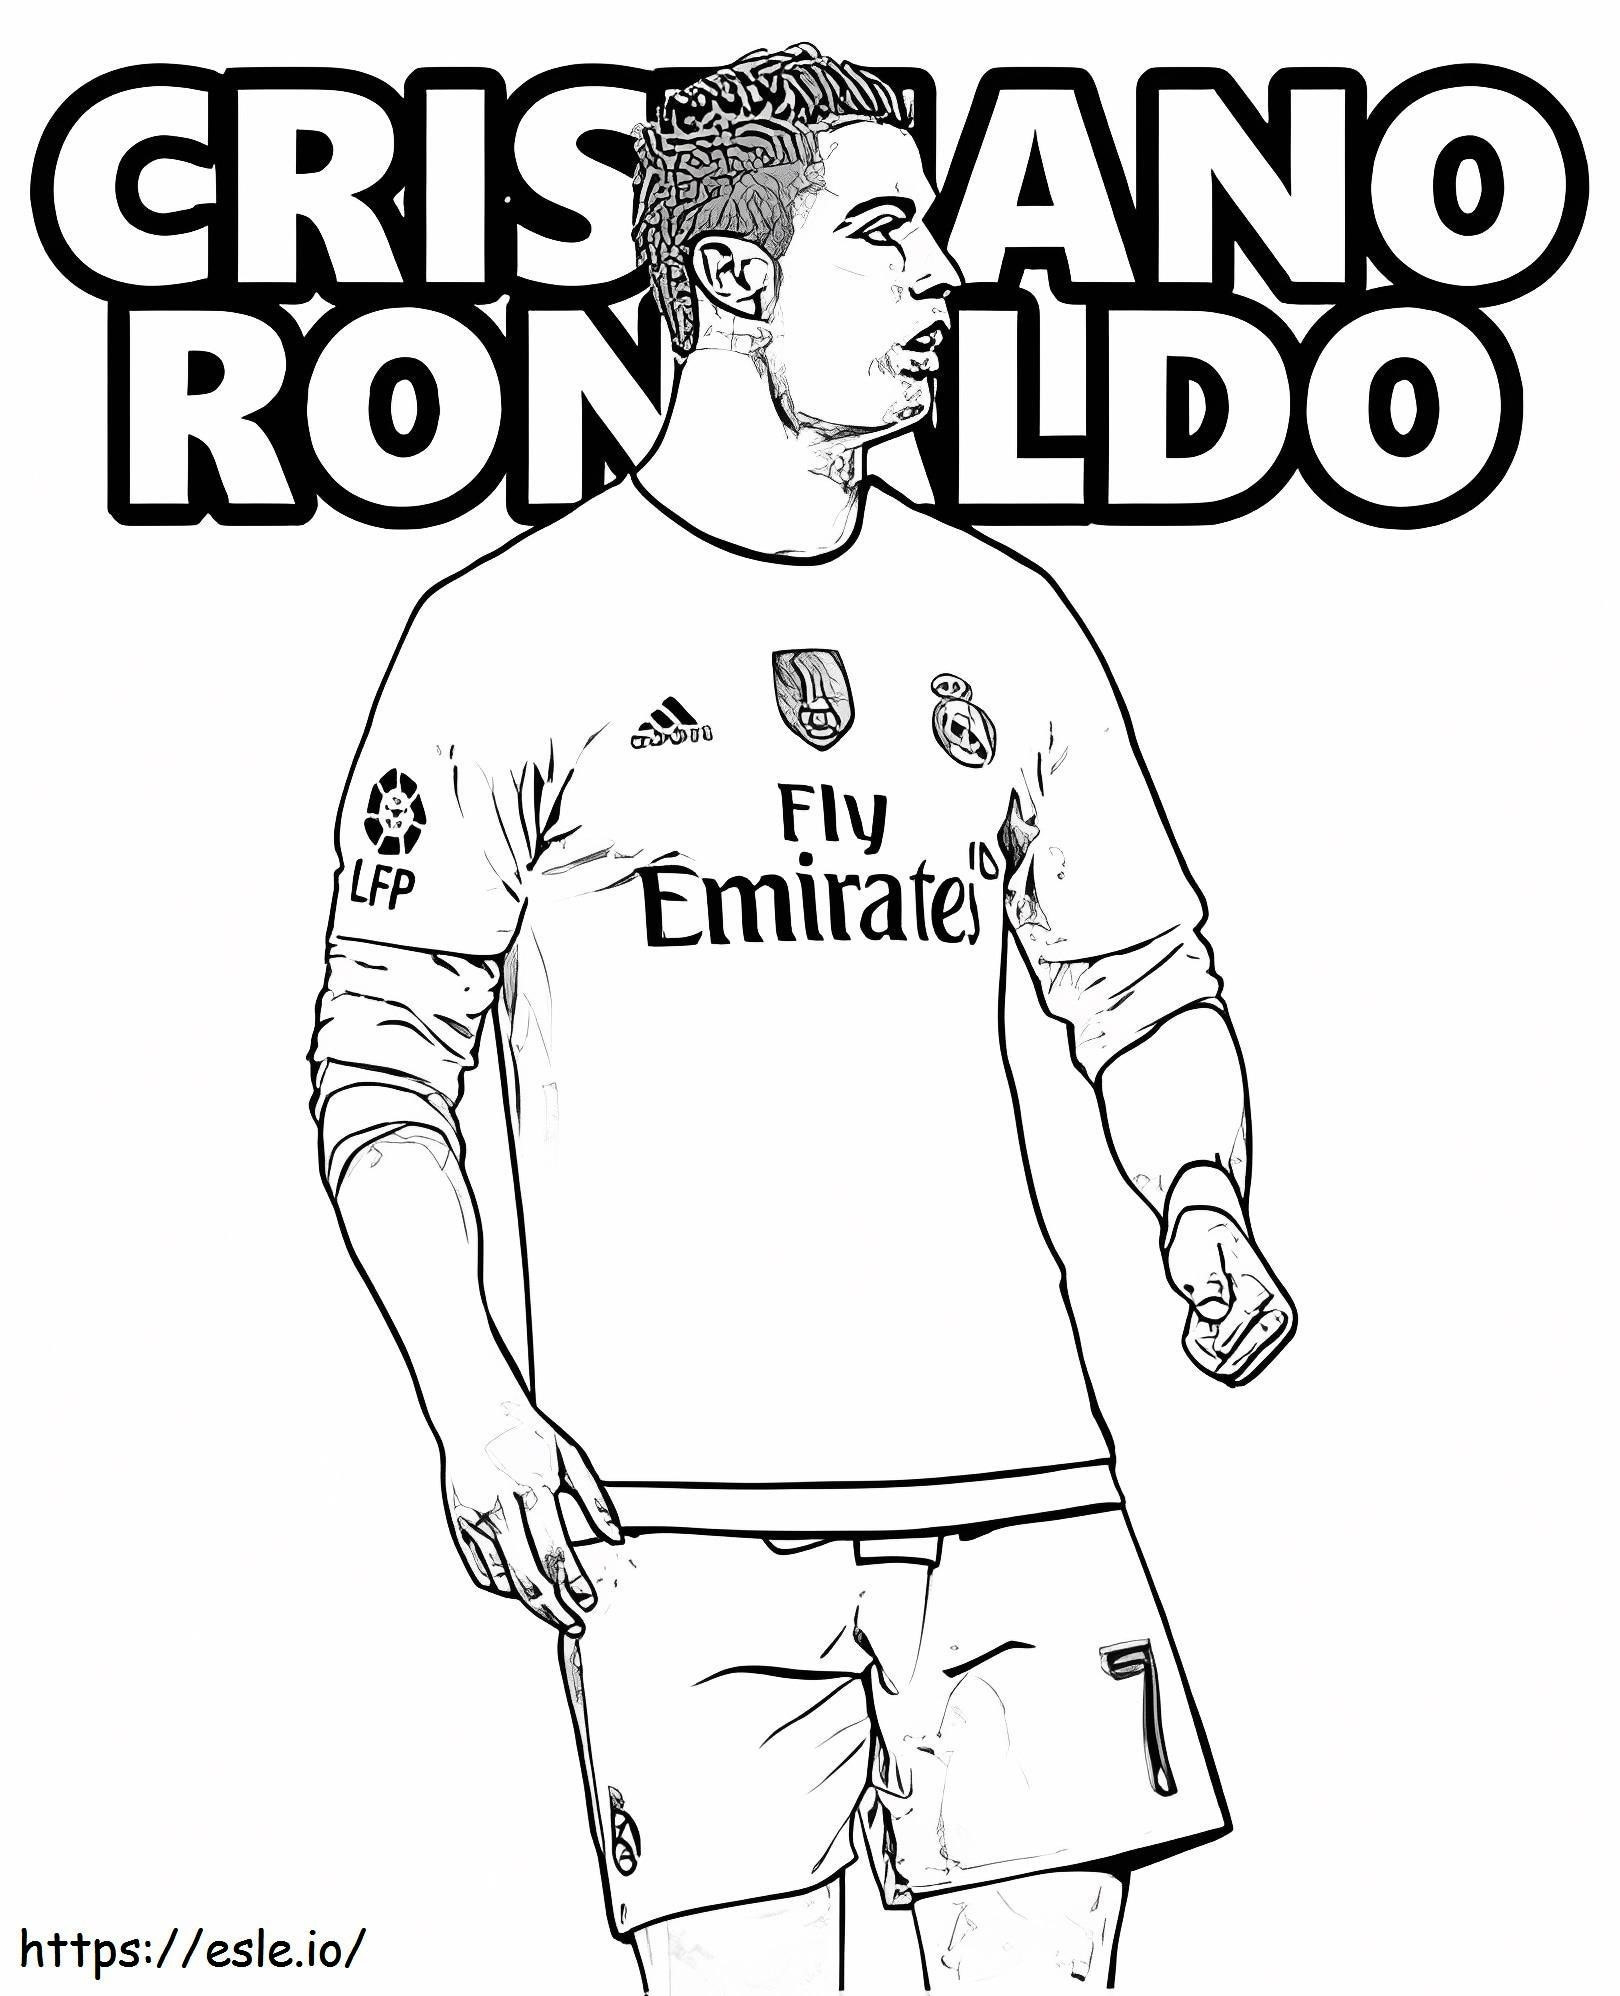 Genial Cristiano Ronaldo coloring page